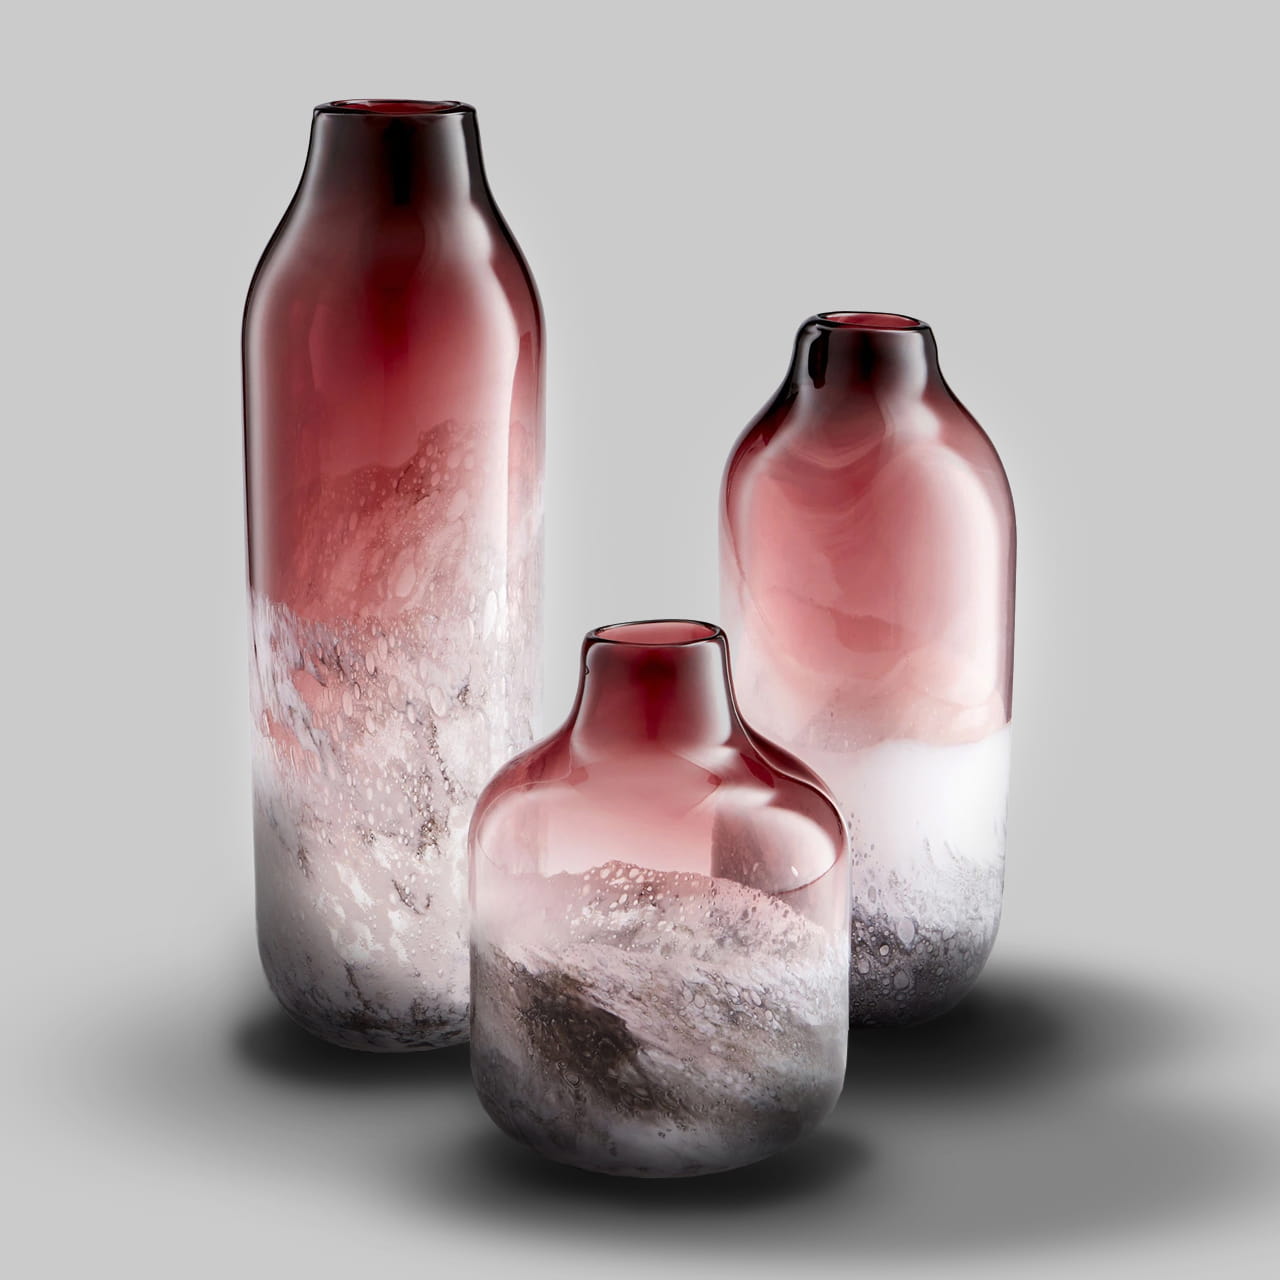 Cyan Design 04999 Cordova Vase,Large 